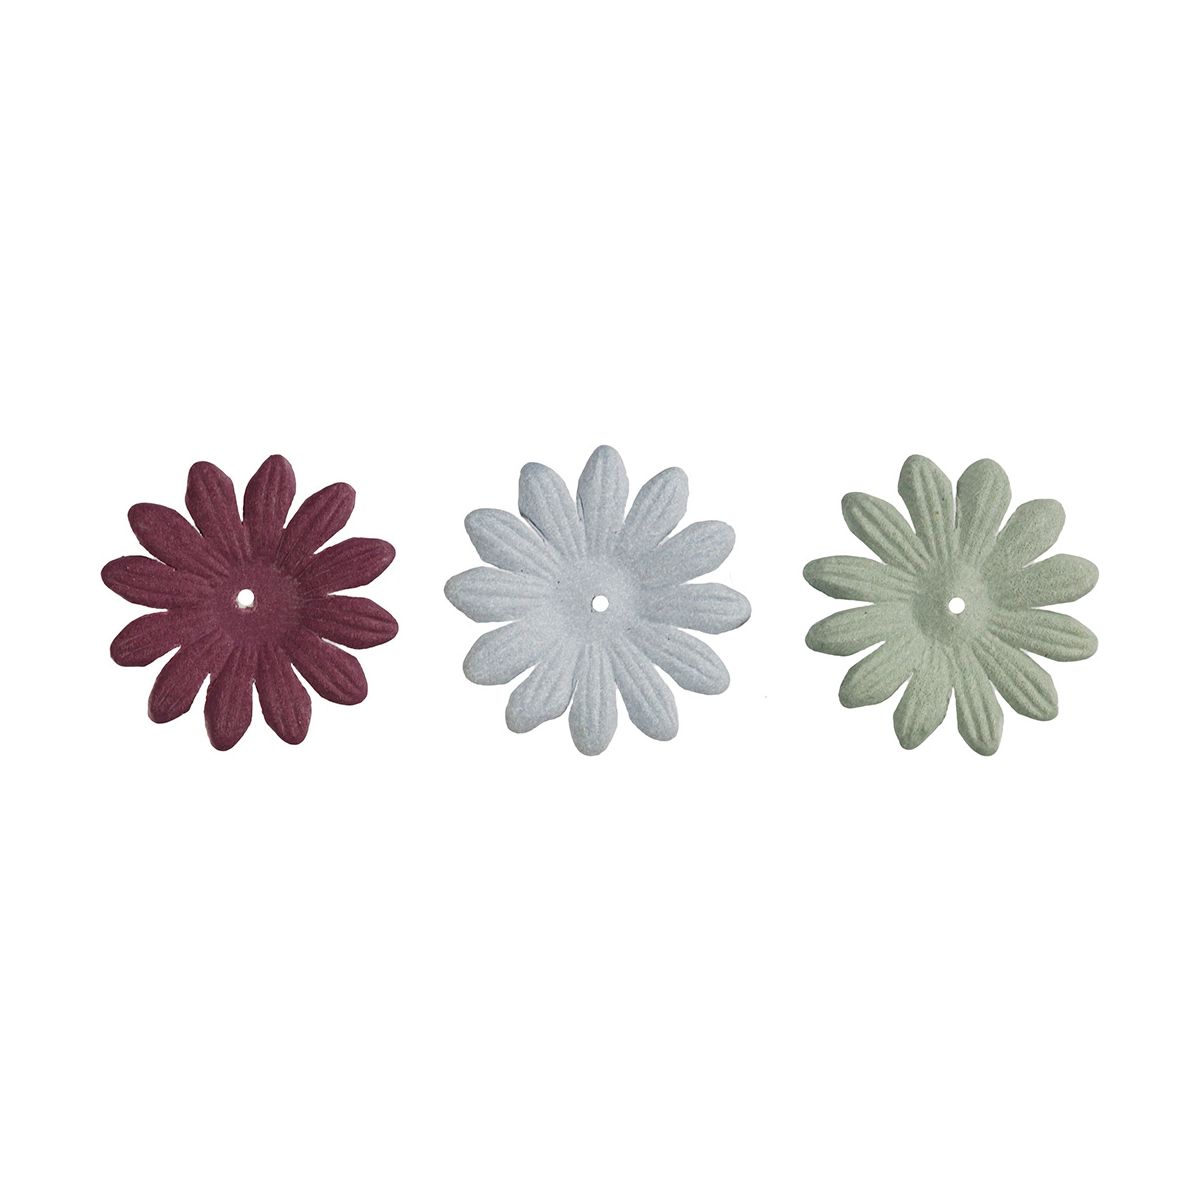 Ozdoba materiałowa Titanum Craft-Fun Series kwiatki (ZD-005)